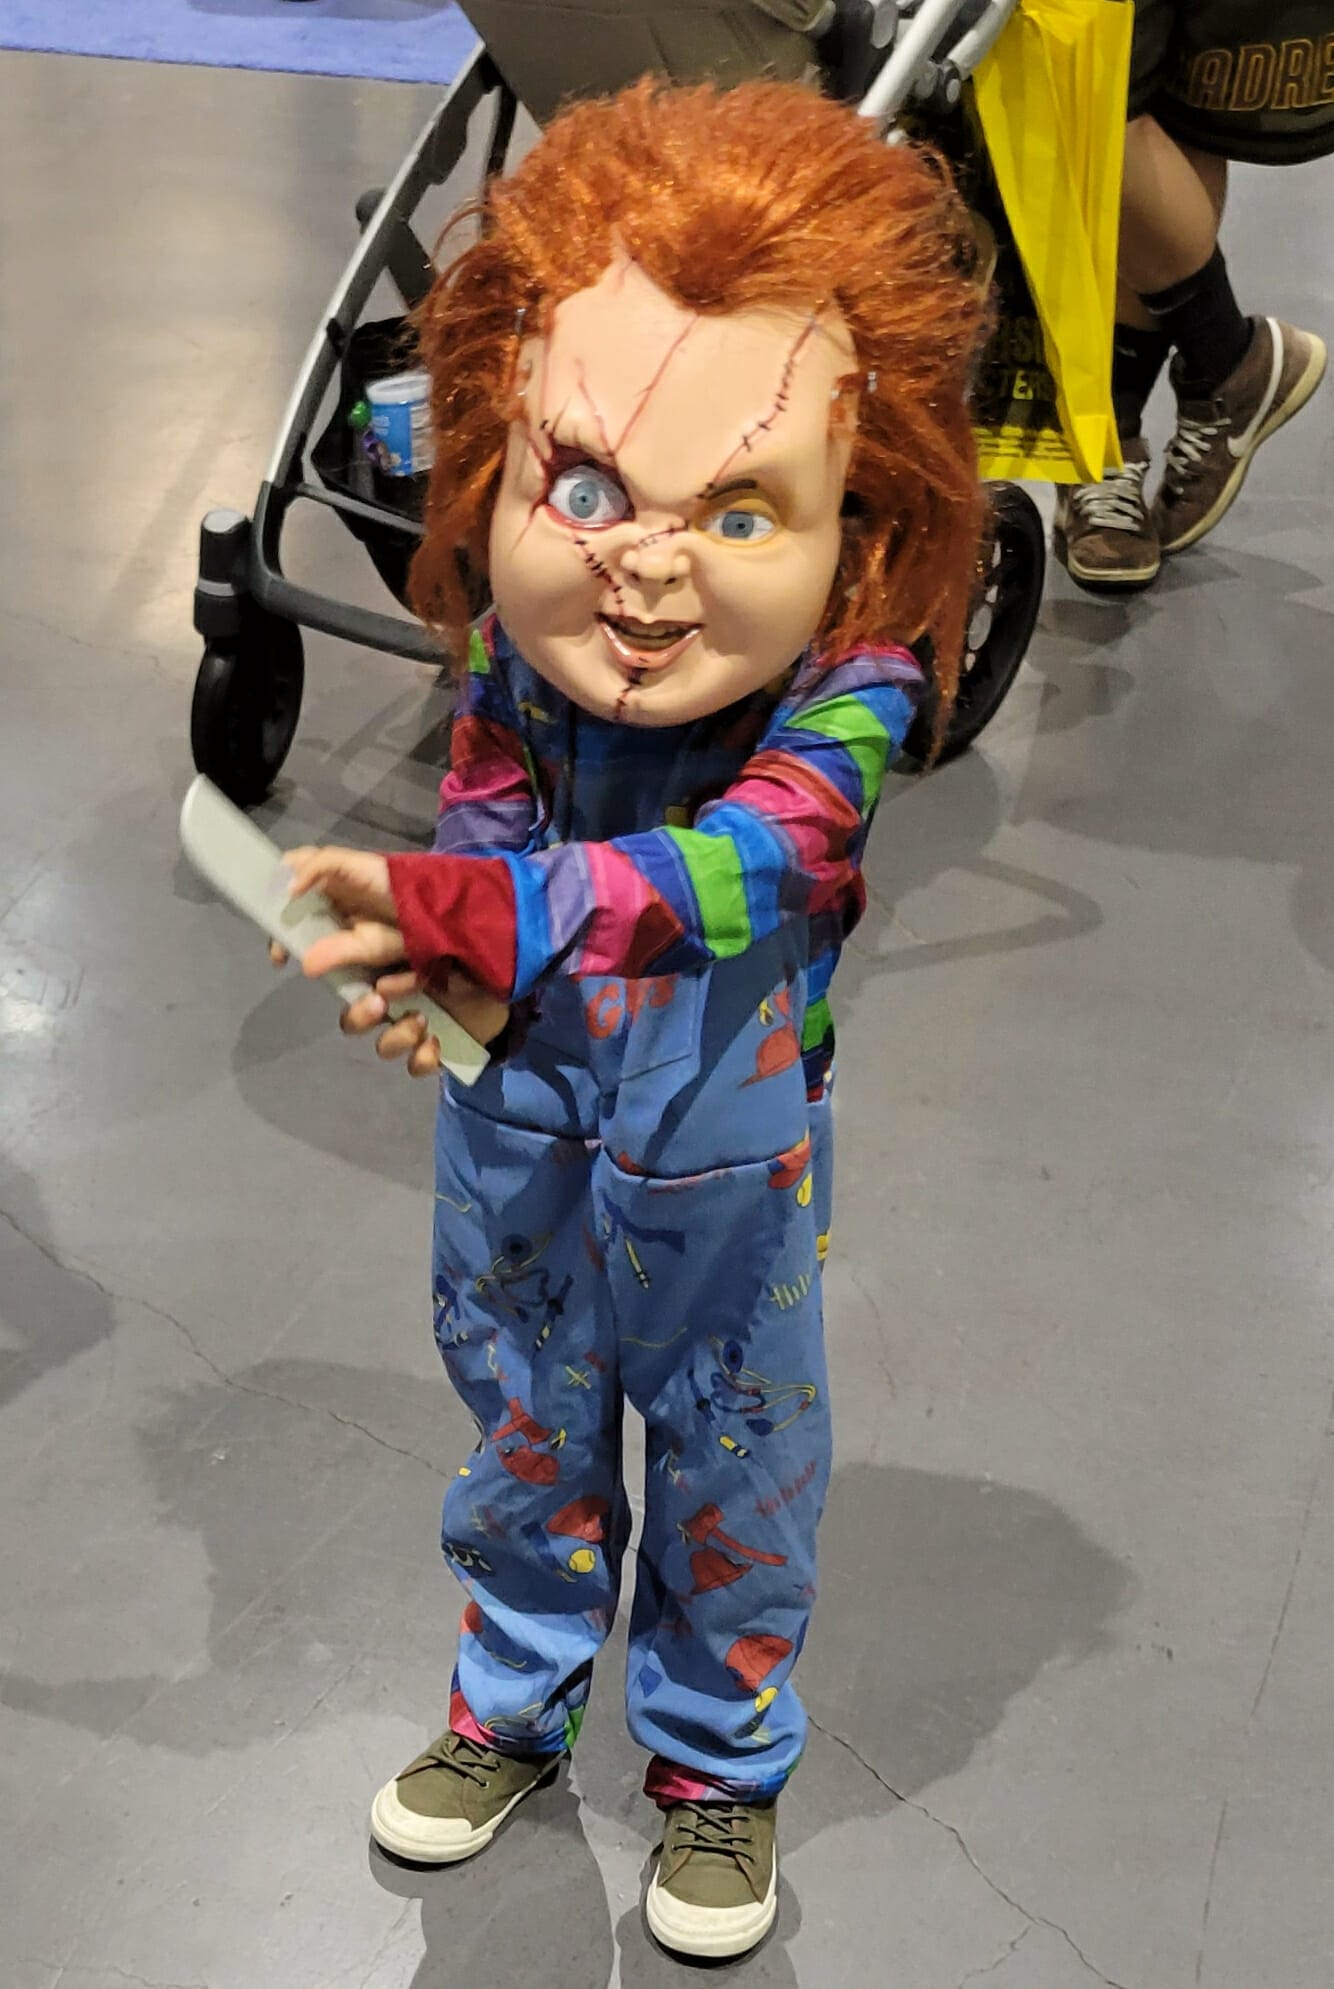 A Lifesize Chucky Doll